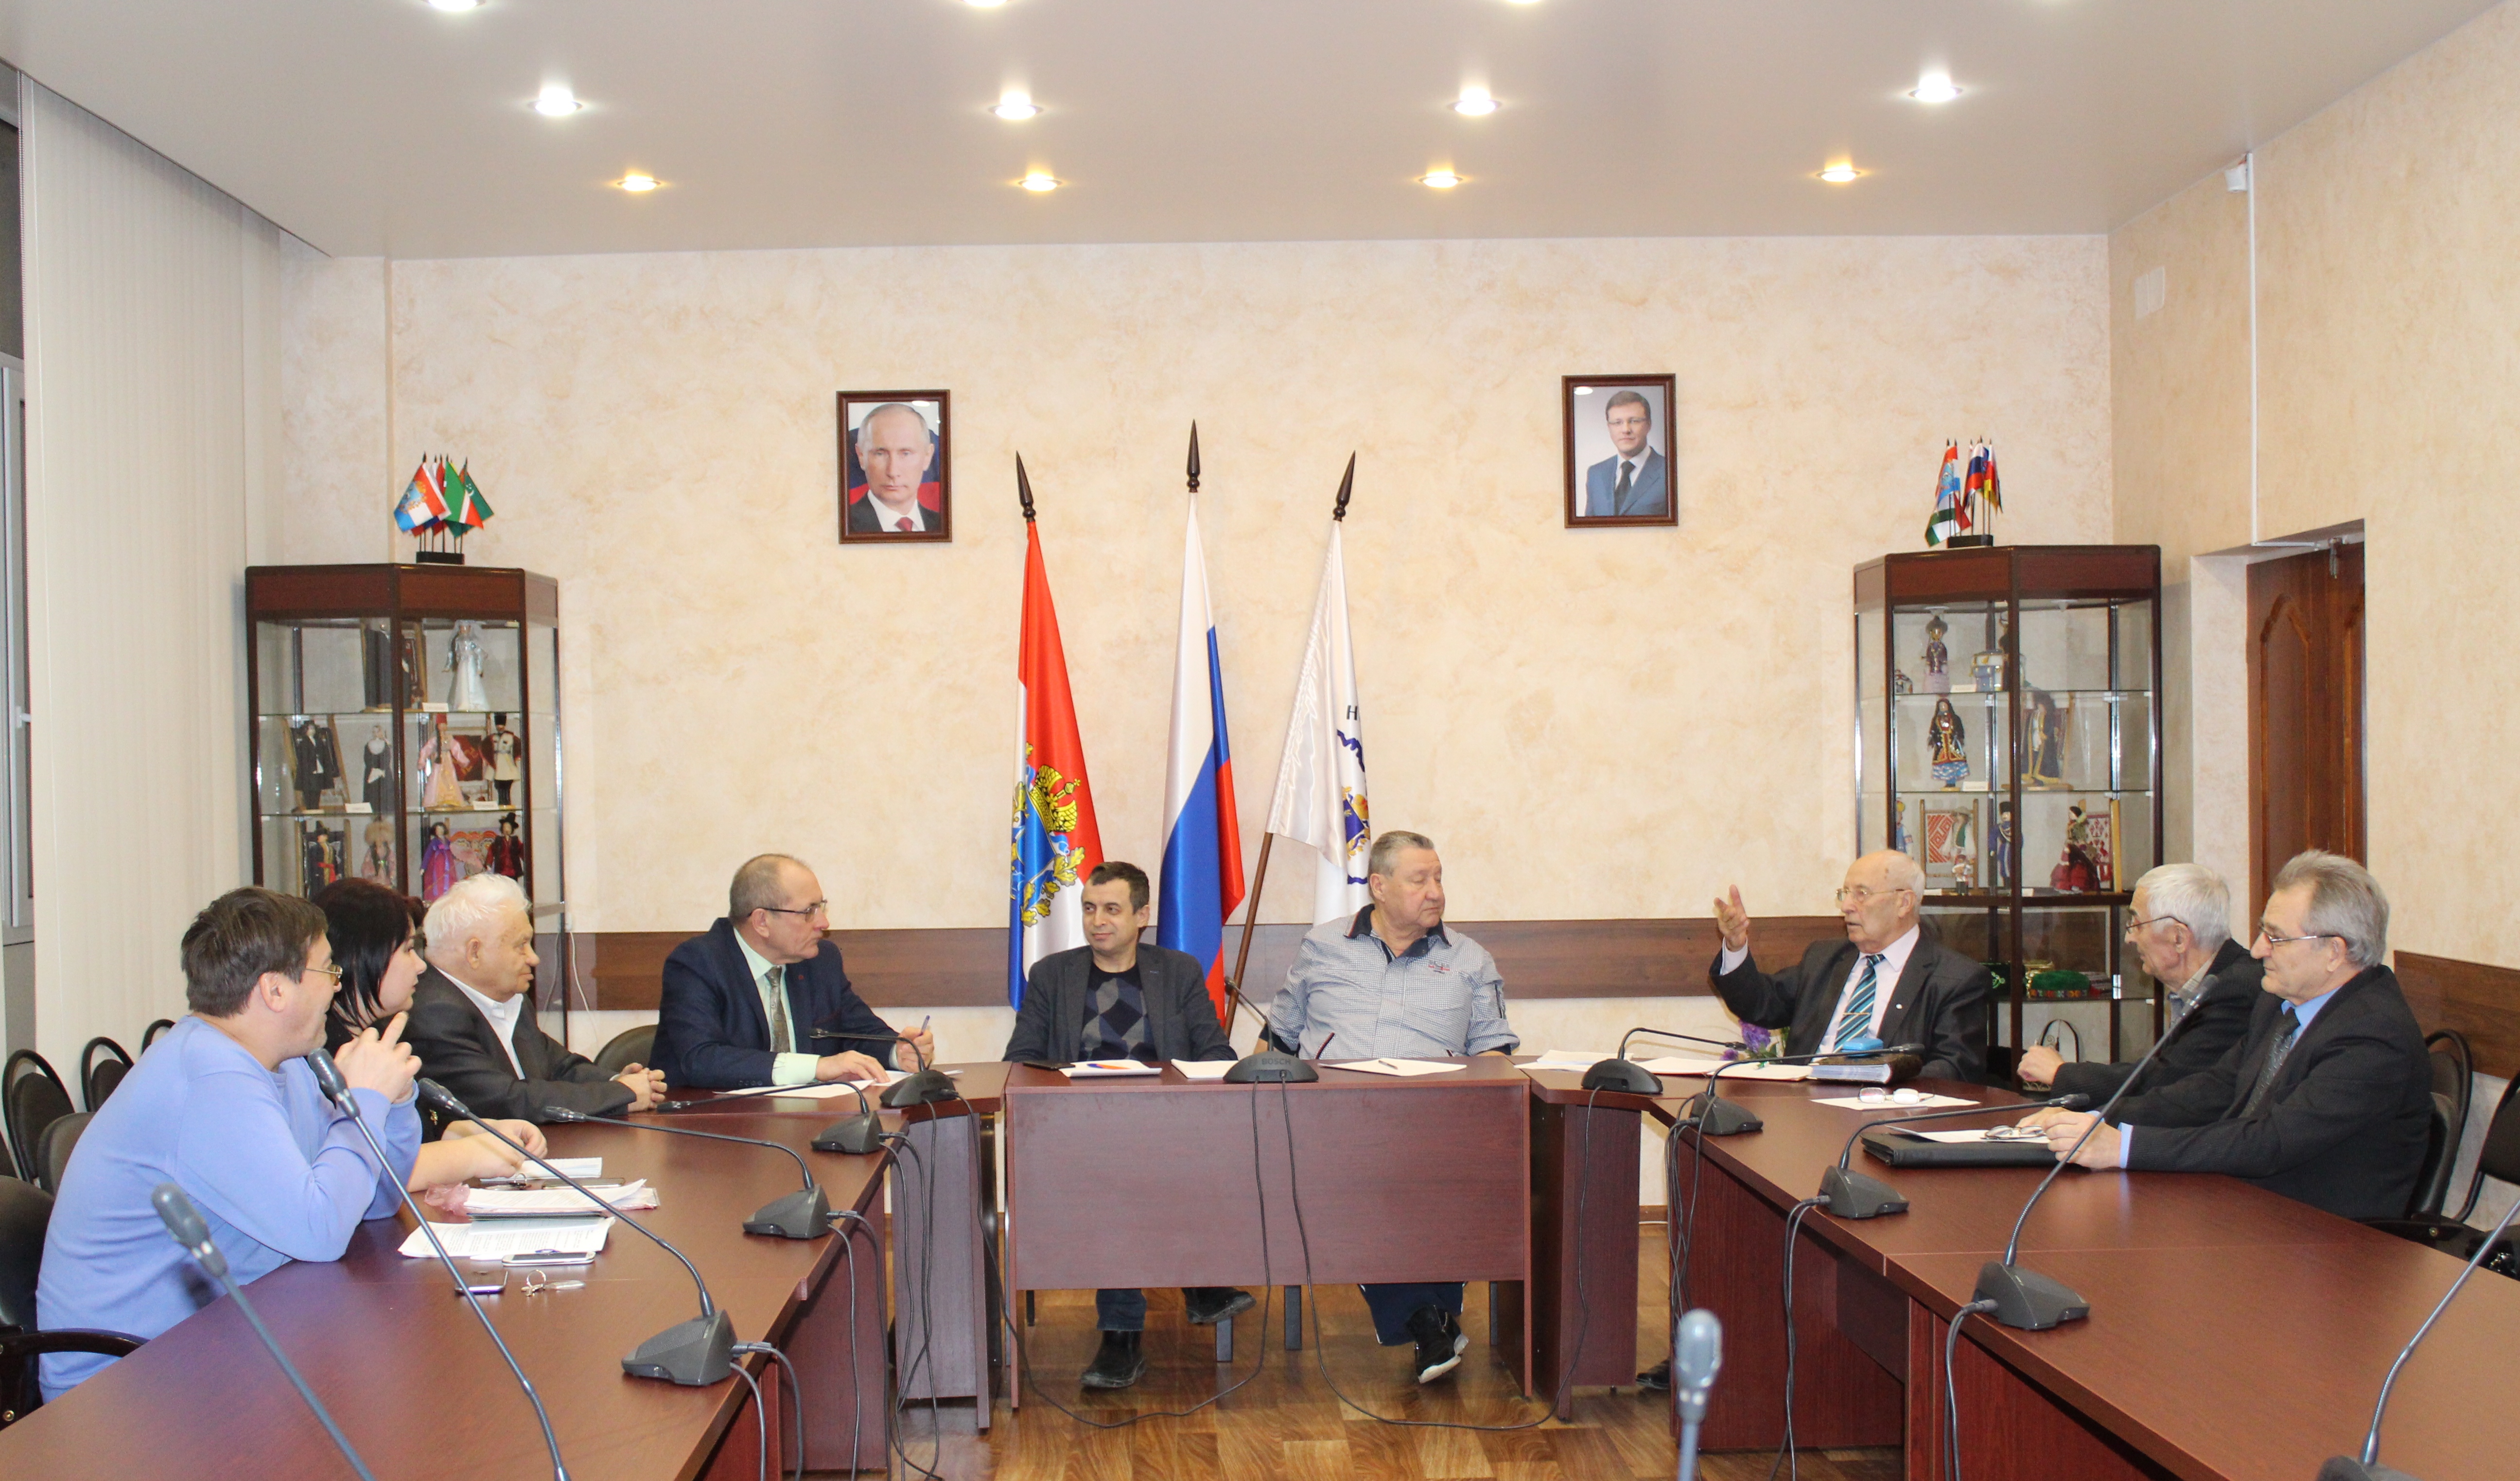 Оргкомитет обсудил ход подготовки к юбилею Гакиля Сагирова в Самаре